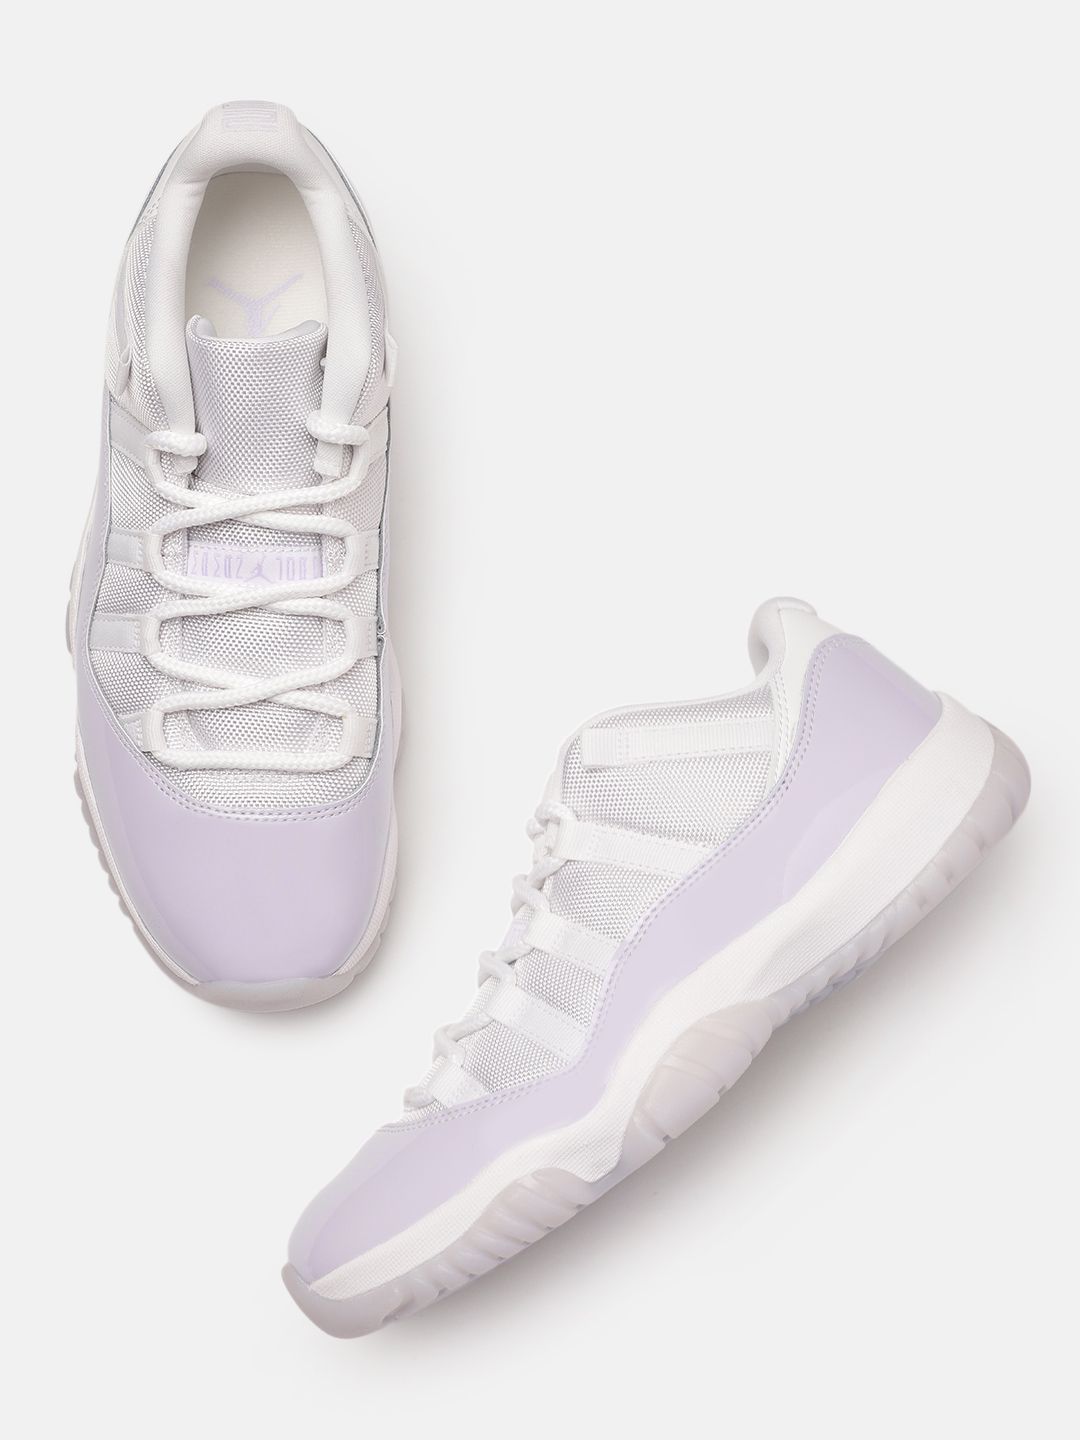 Nike Women Lavender Leather Air Jordan 11 Retro Low Basketball Shoes Price in India